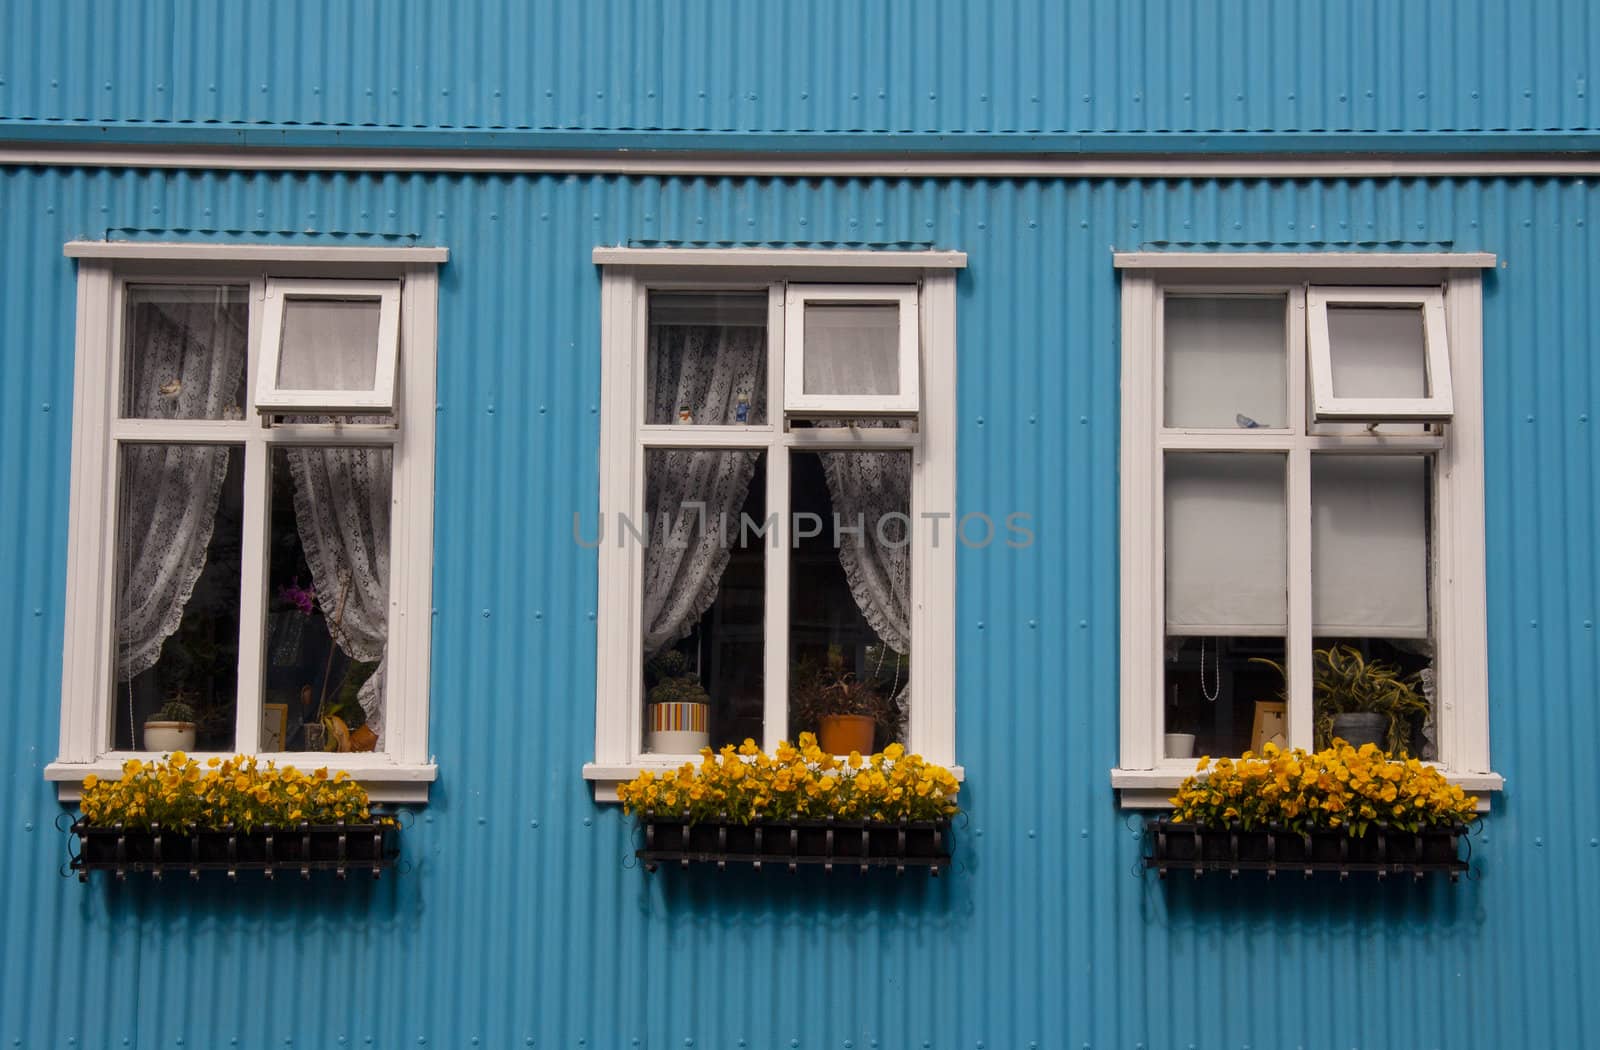 Three typical windows in Reykjavik - Iceland